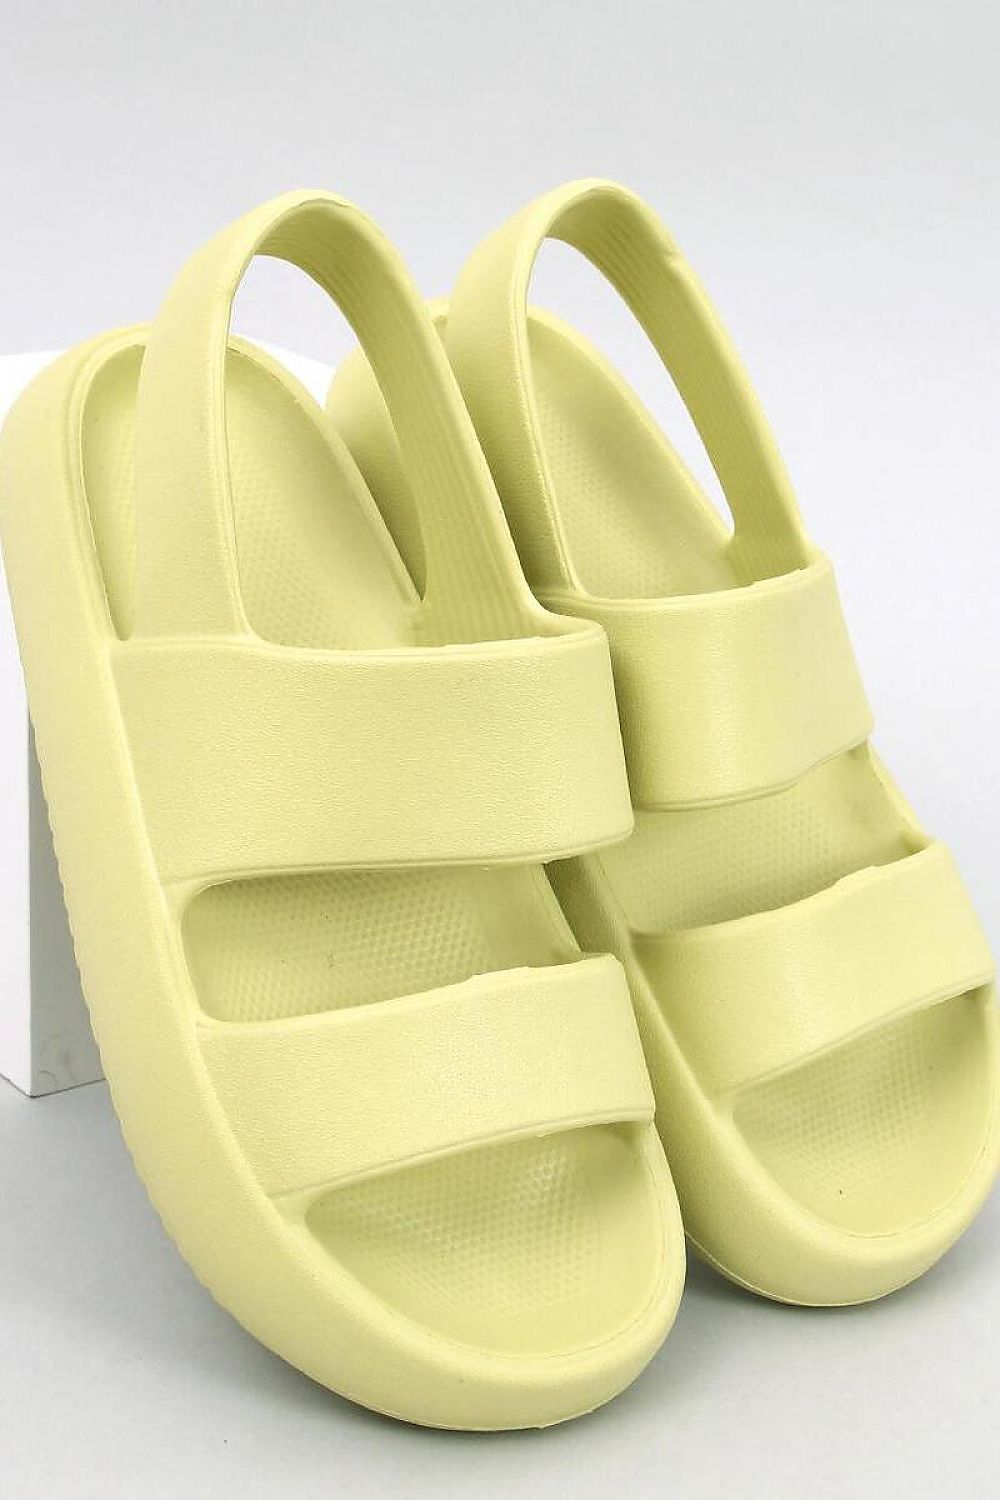 TEEK - Citrus Double Band Foam Sandals SHOES TEEK MH 6  